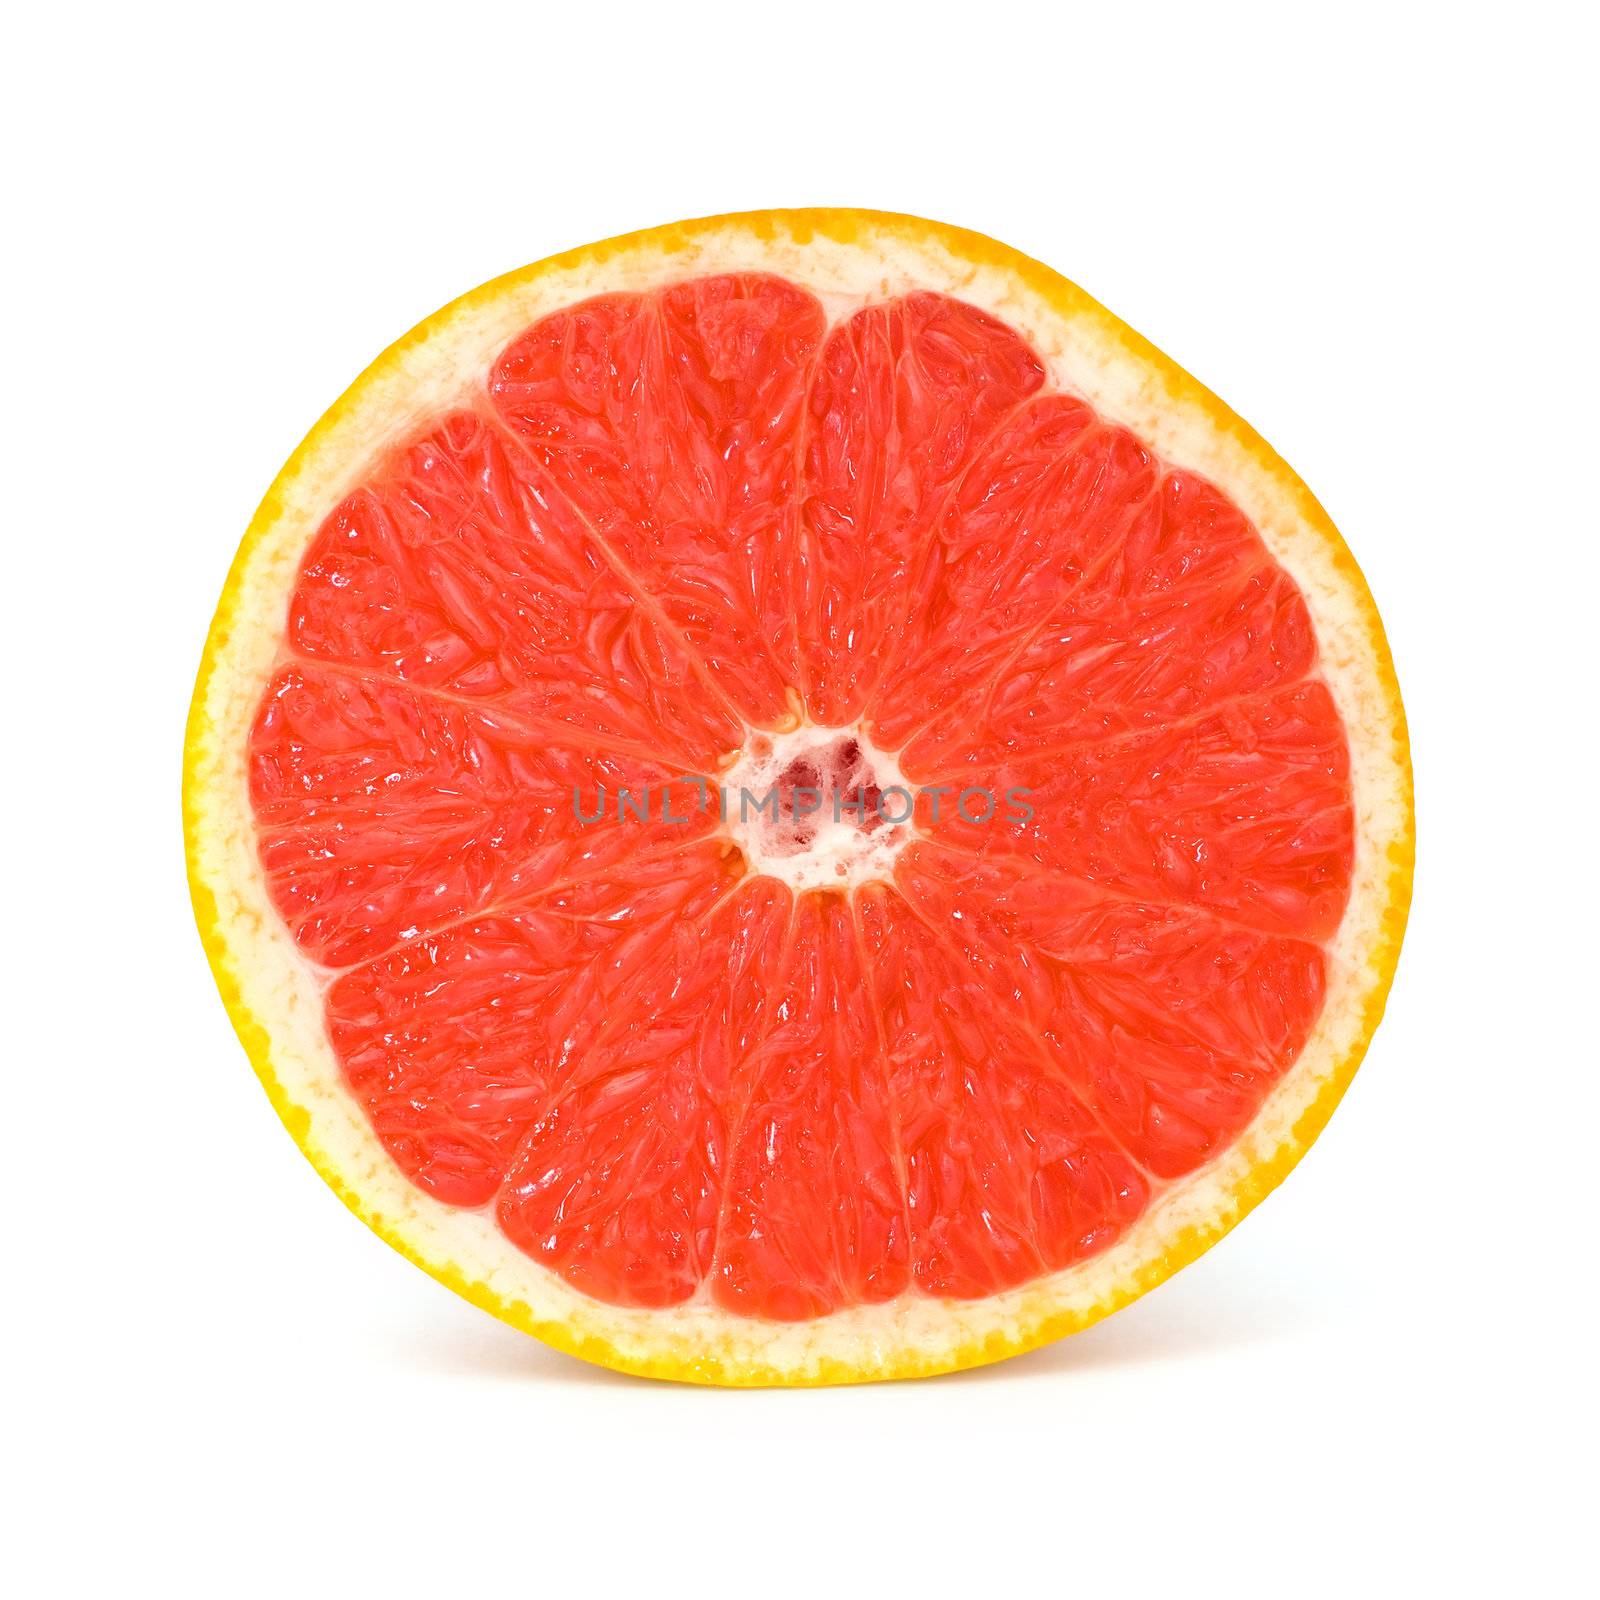 Fresh Grapefruit by maxkrasnov